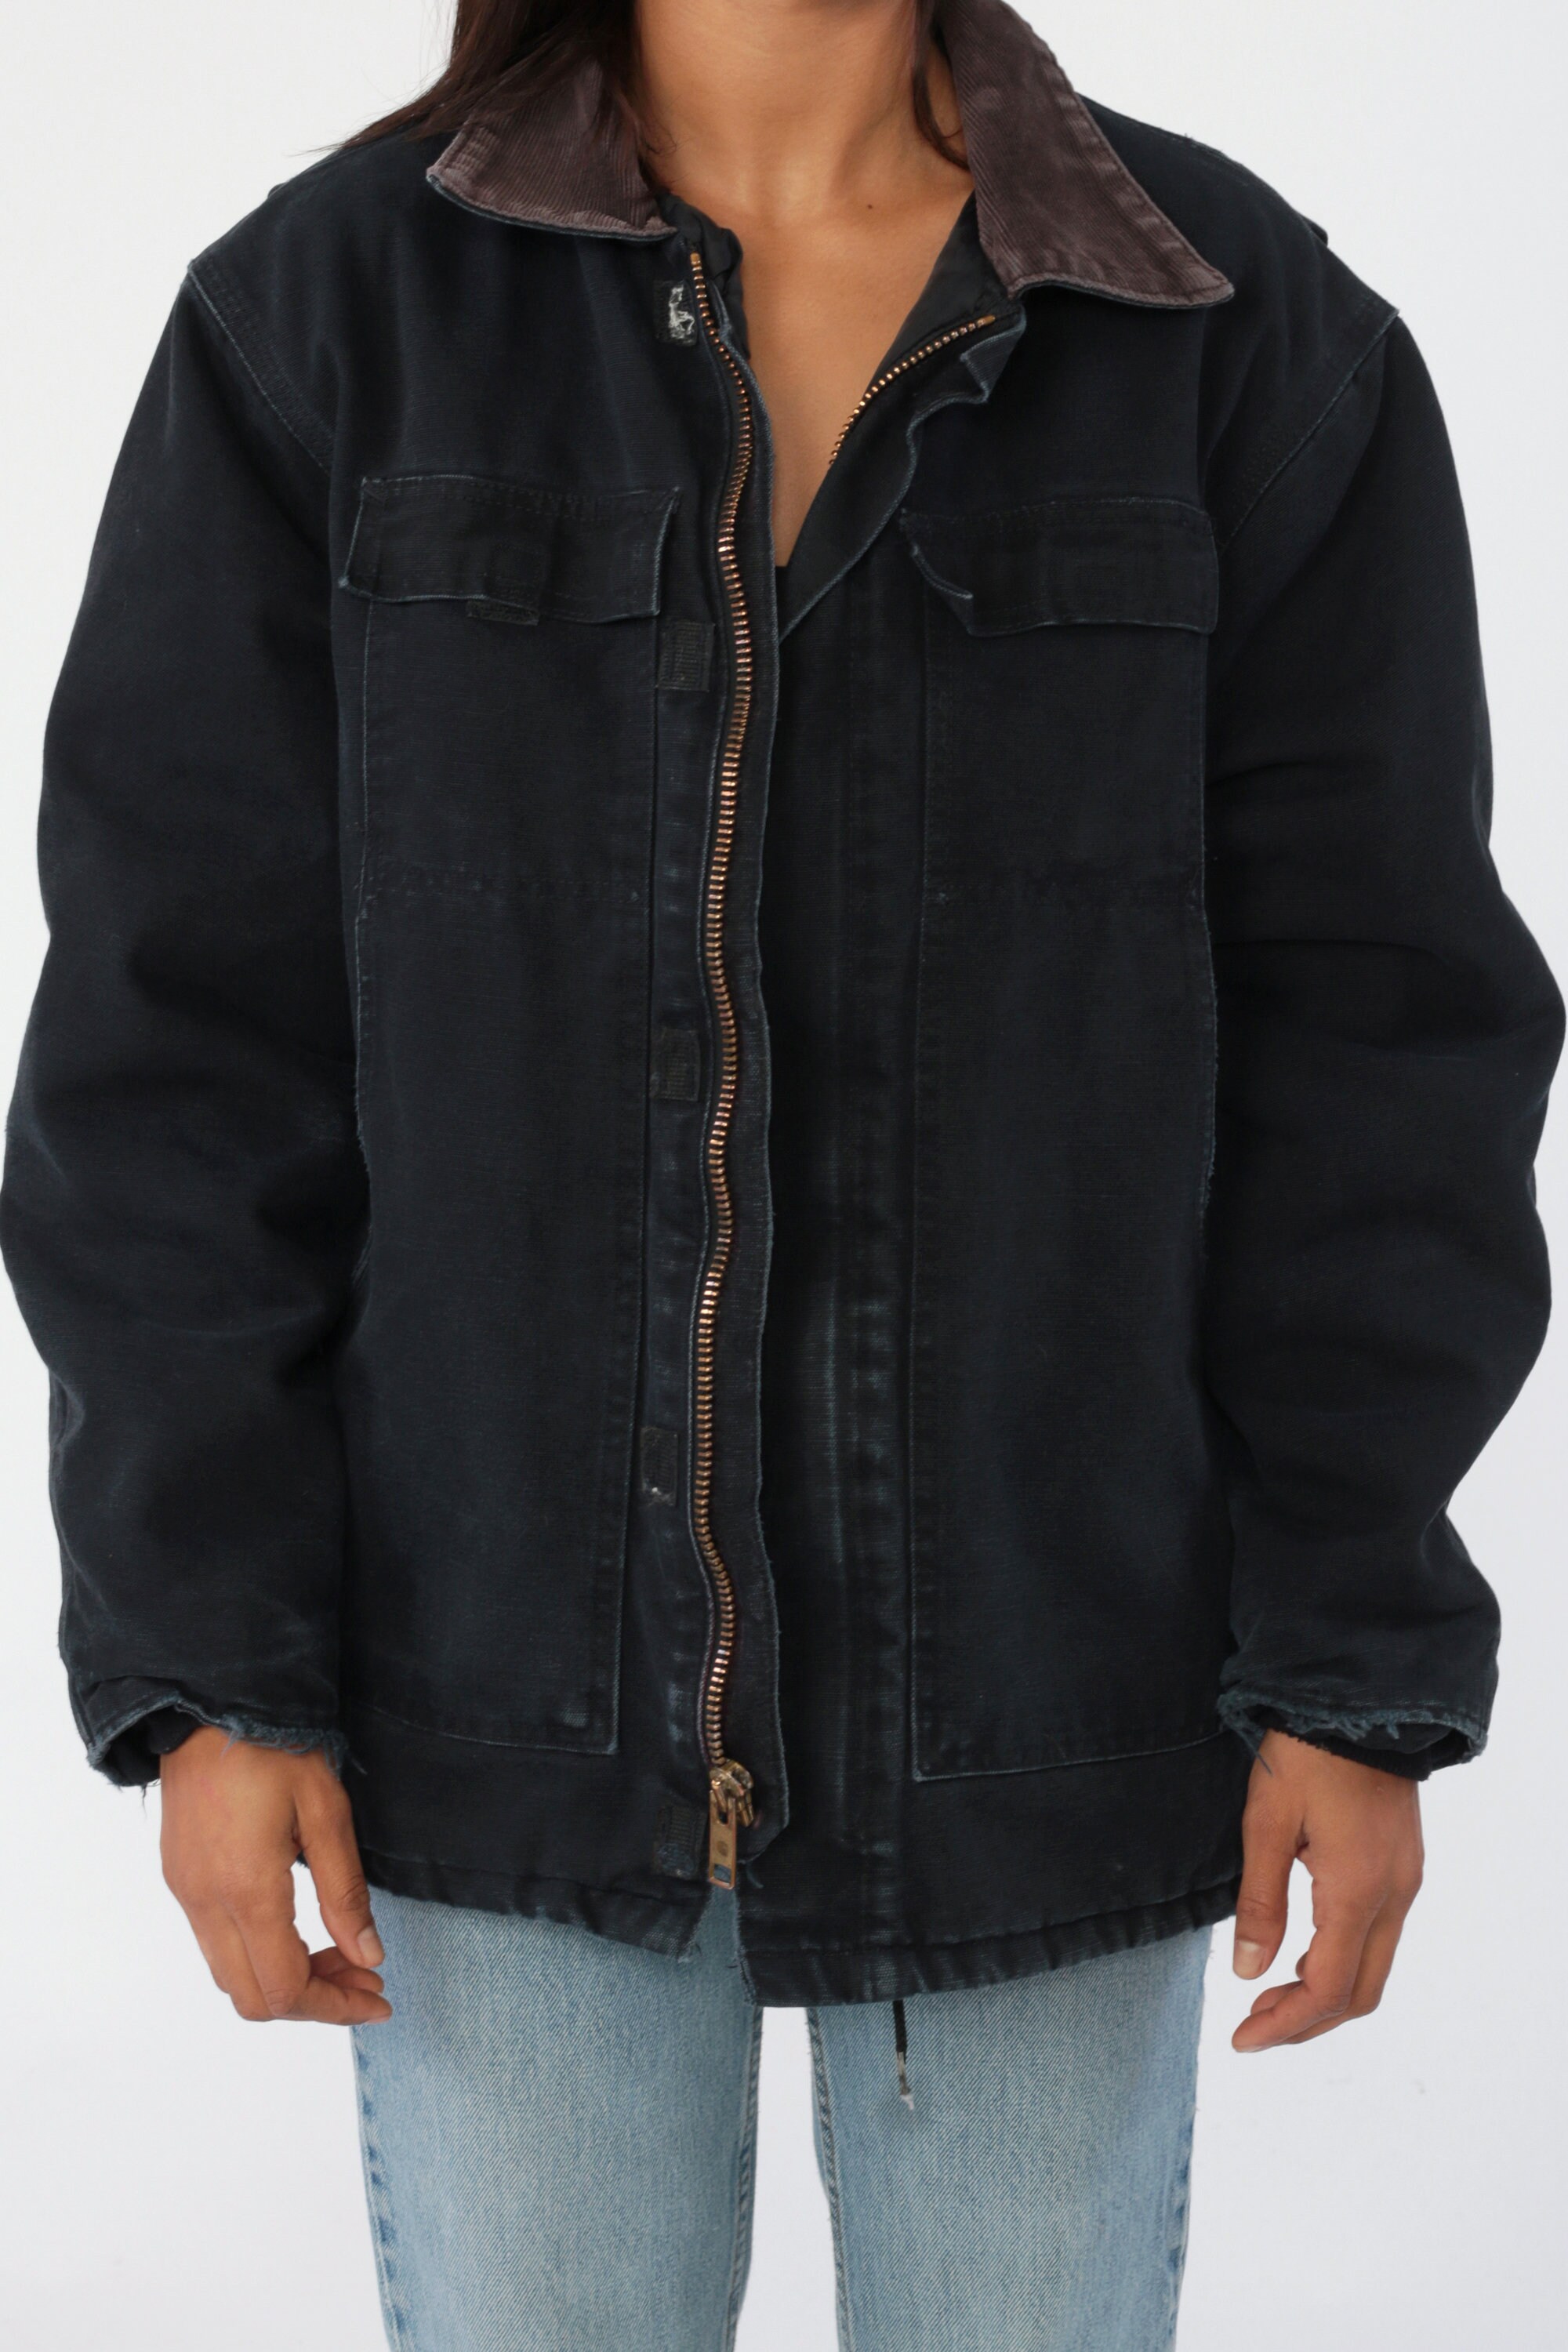 Black Carhartt Jacket 90s CORDUROY COLLAR Grunge Quilted Vintage Zip Up